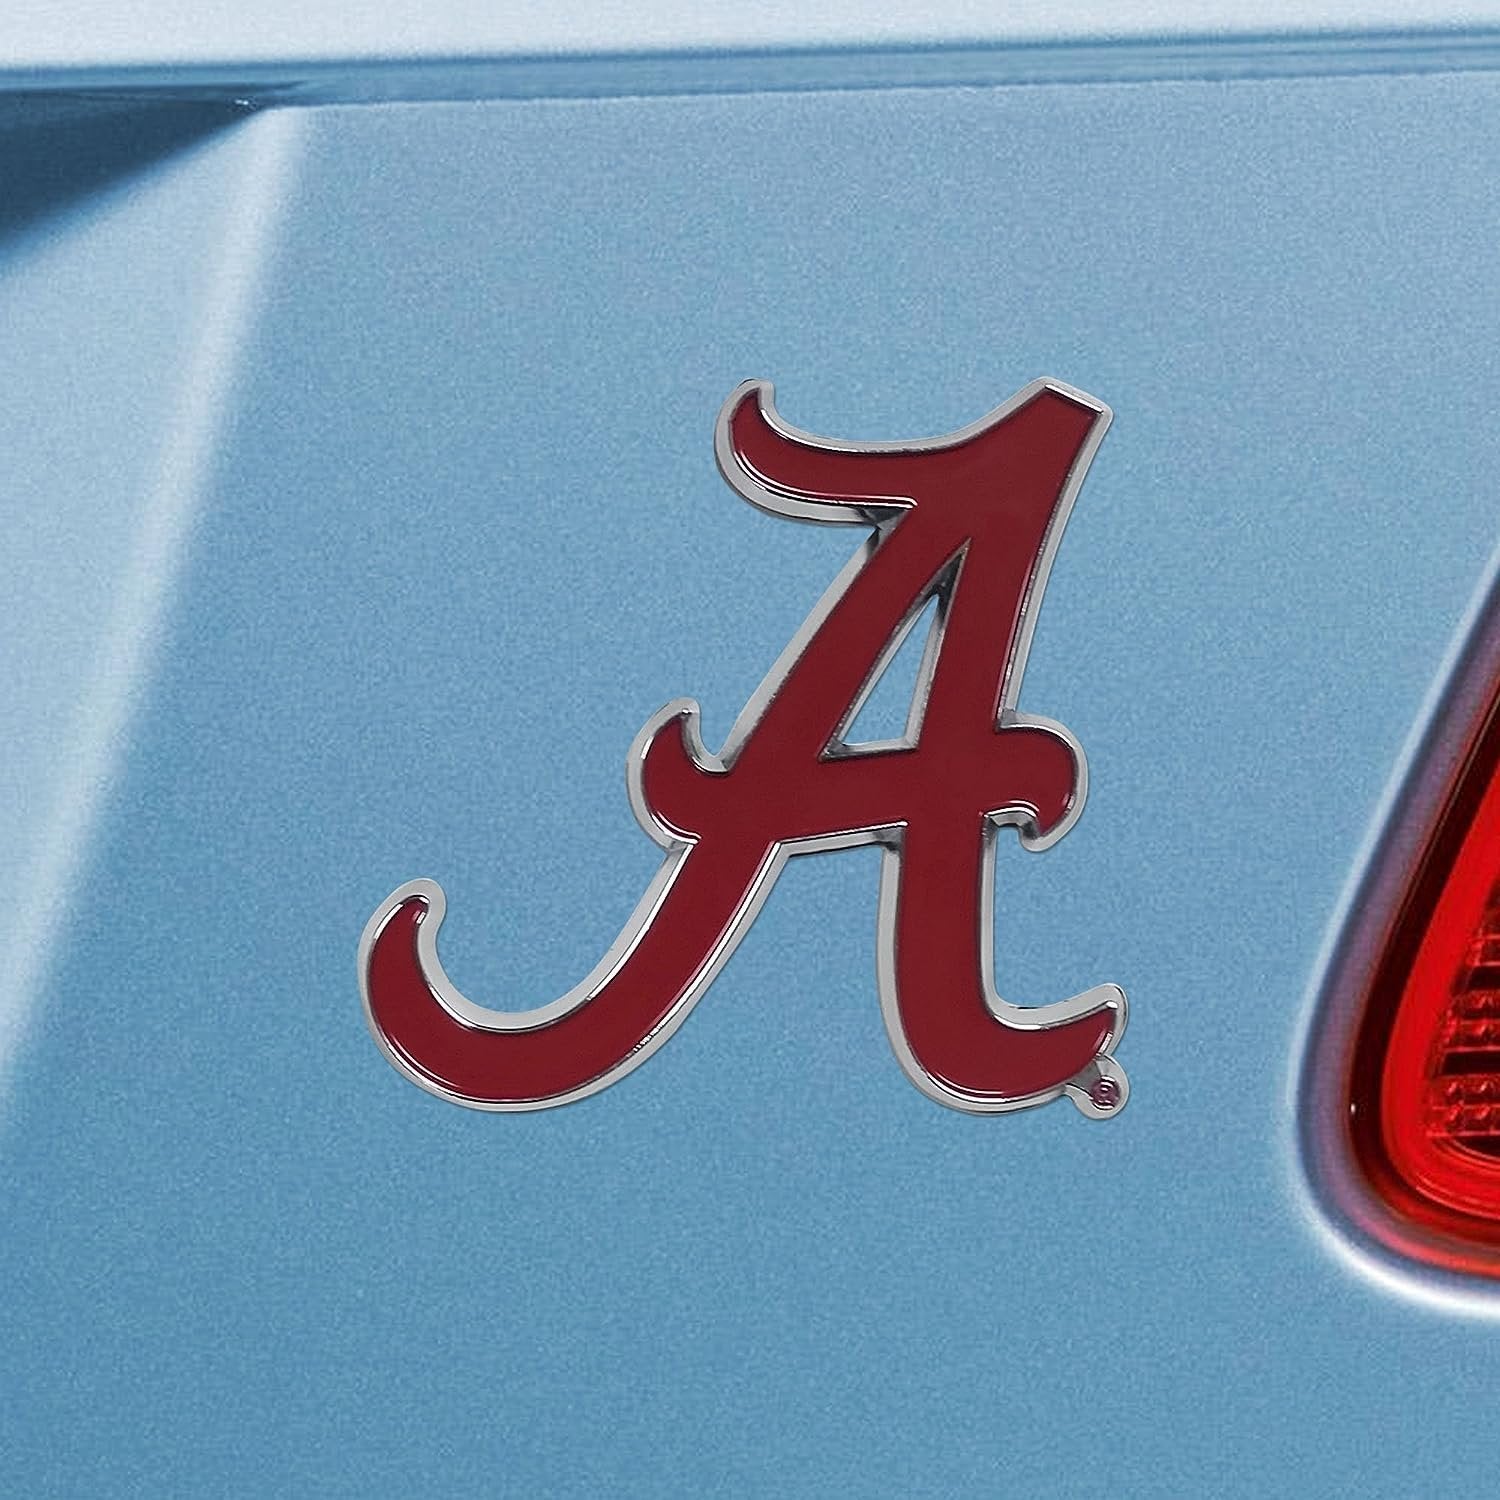 University of Alabama Crimson Tide Solid Metal Raised Auto Emblem Decal Adhesive Backing